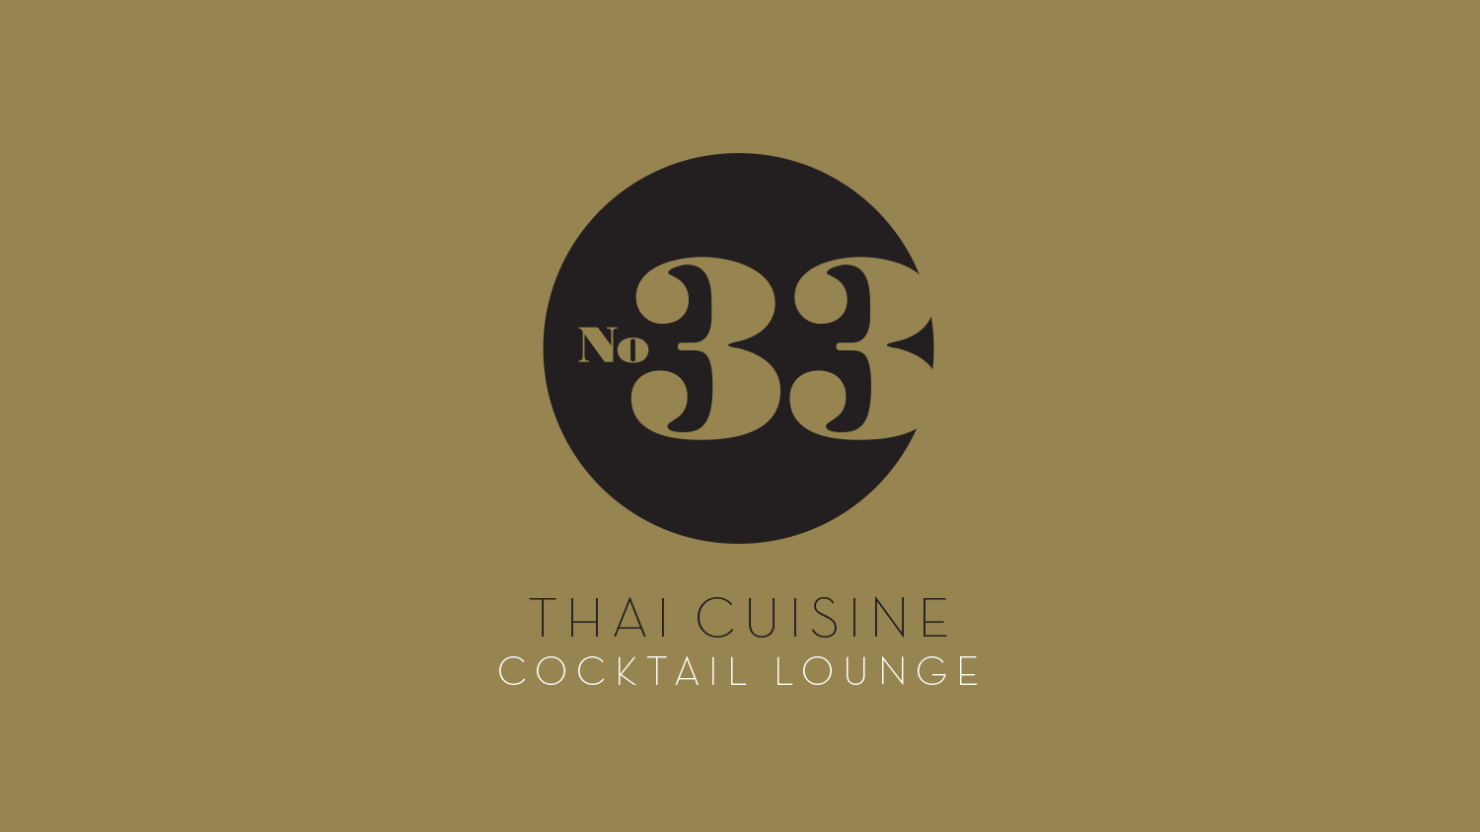 Example logo design for No. 33 Thai cuisine cocktail lounge bar restaurant Solihull